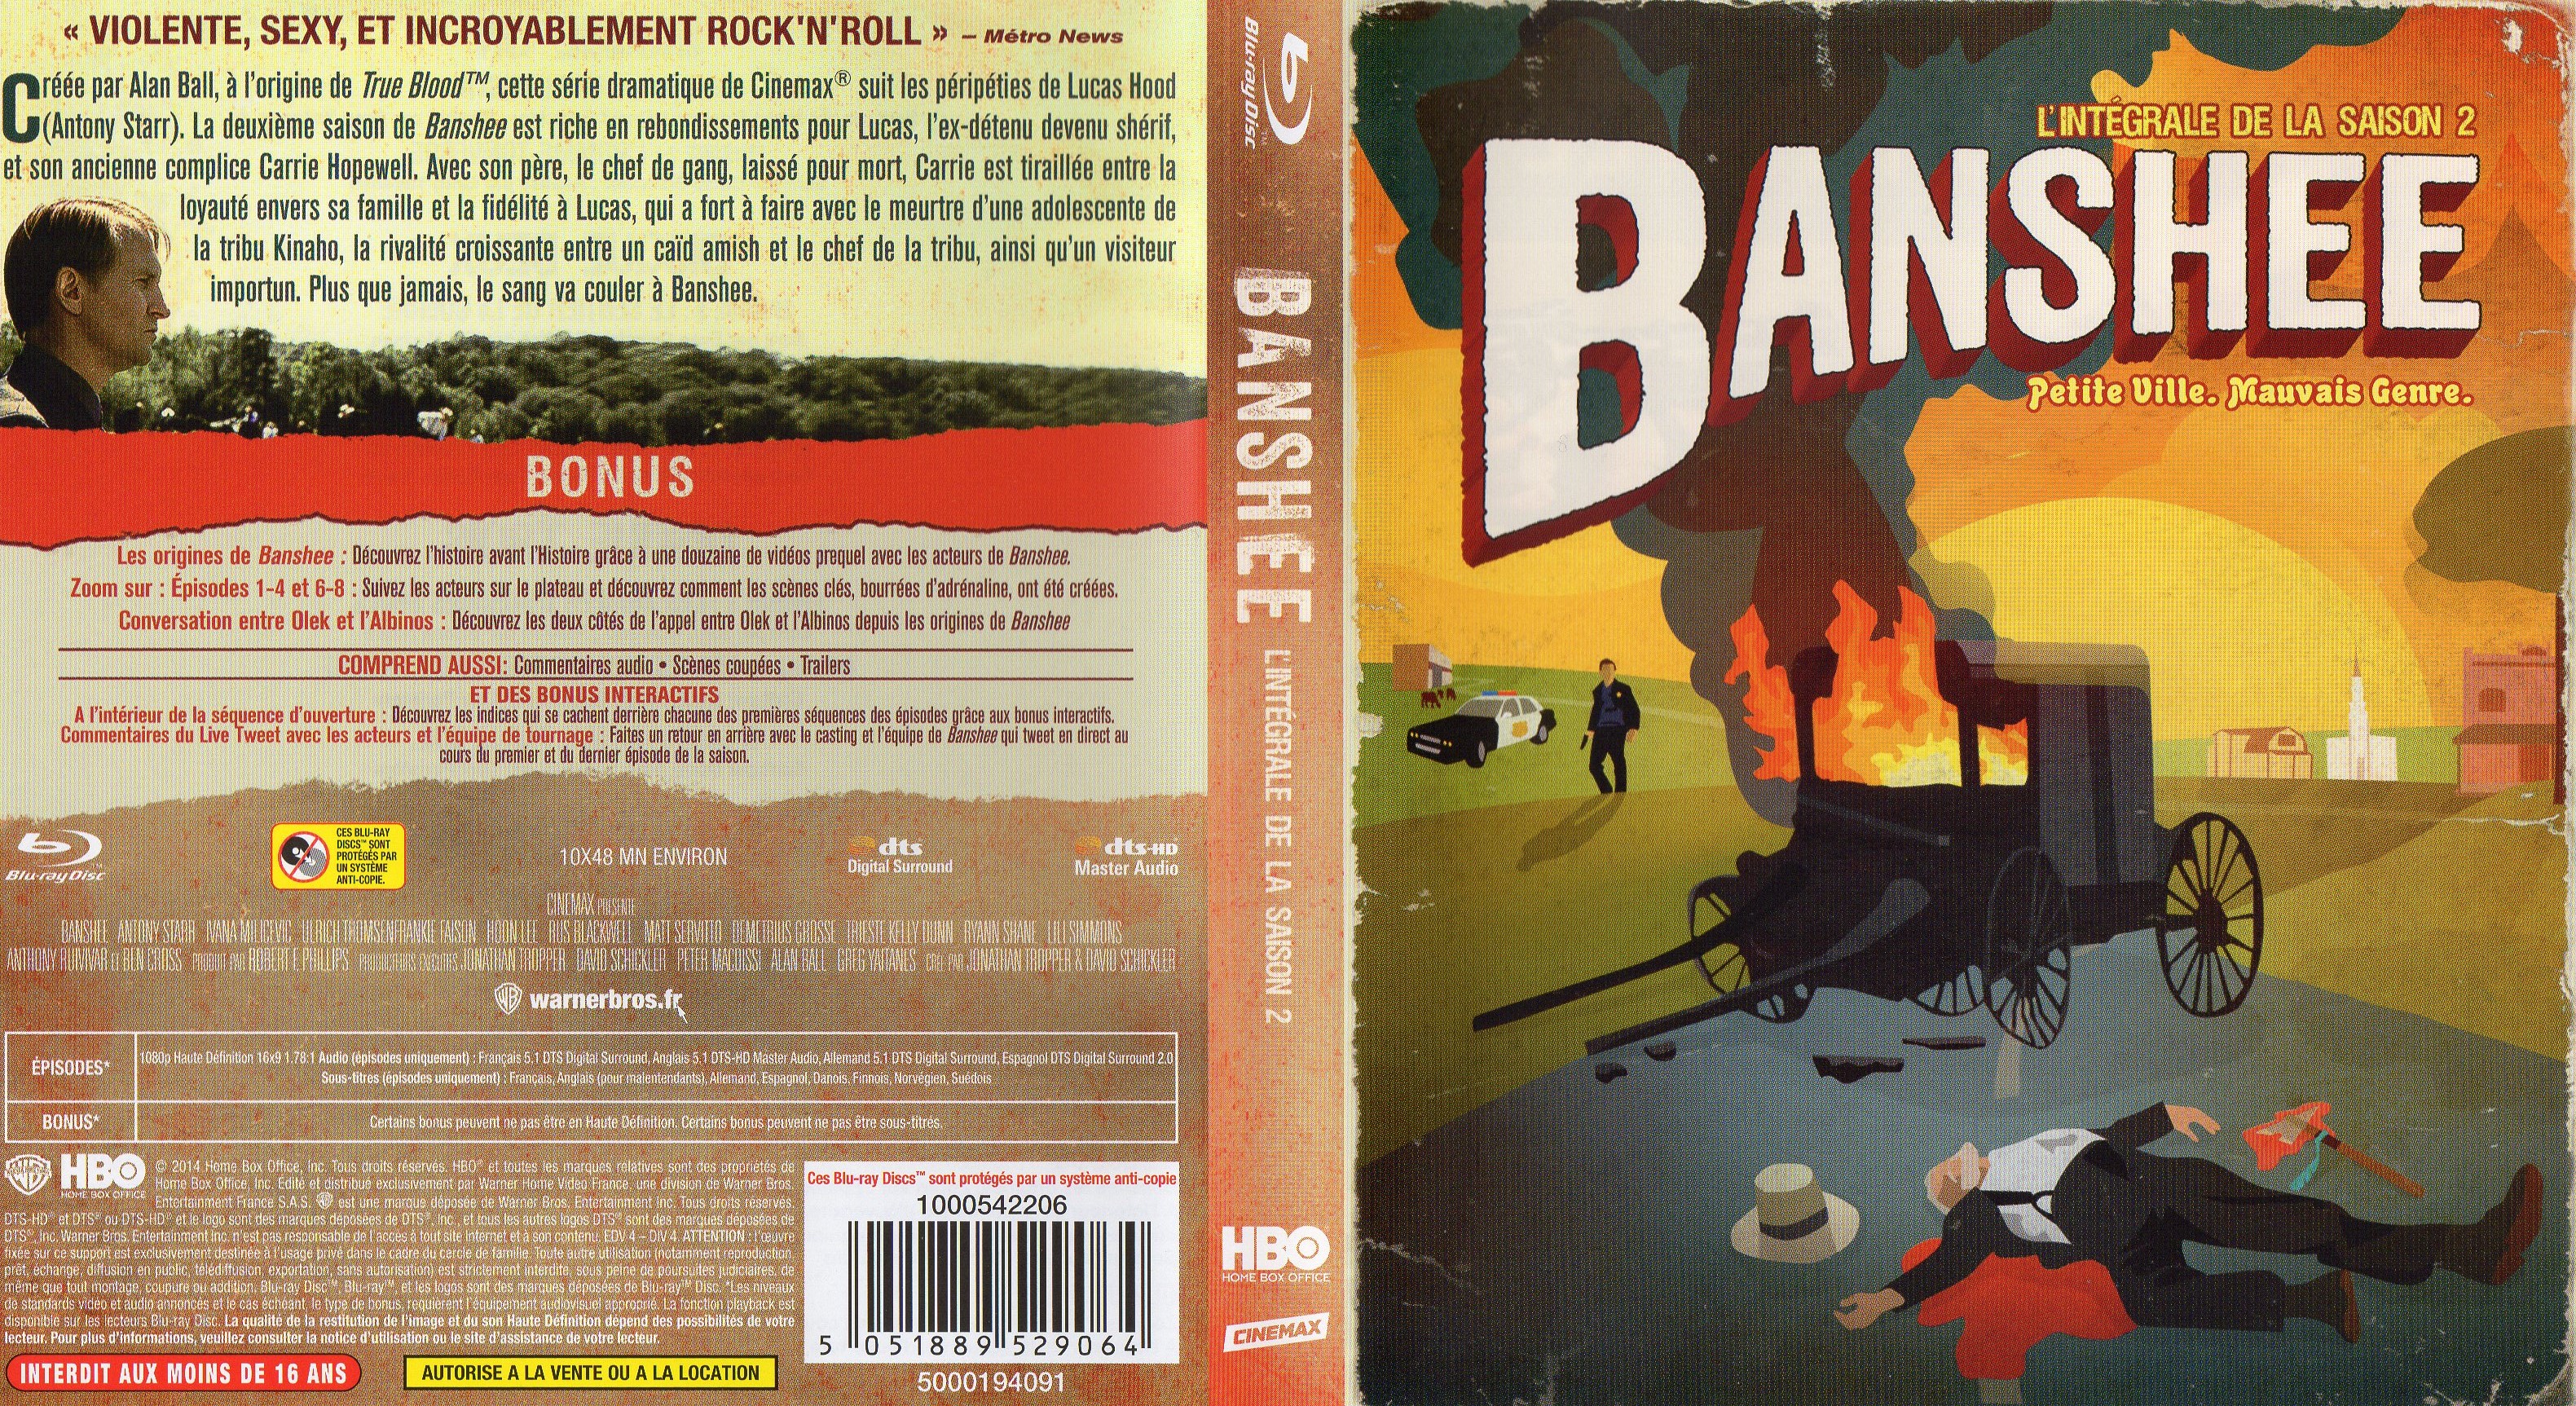 Jaquette DVD Banshee saison 2 (BLU-RAY)